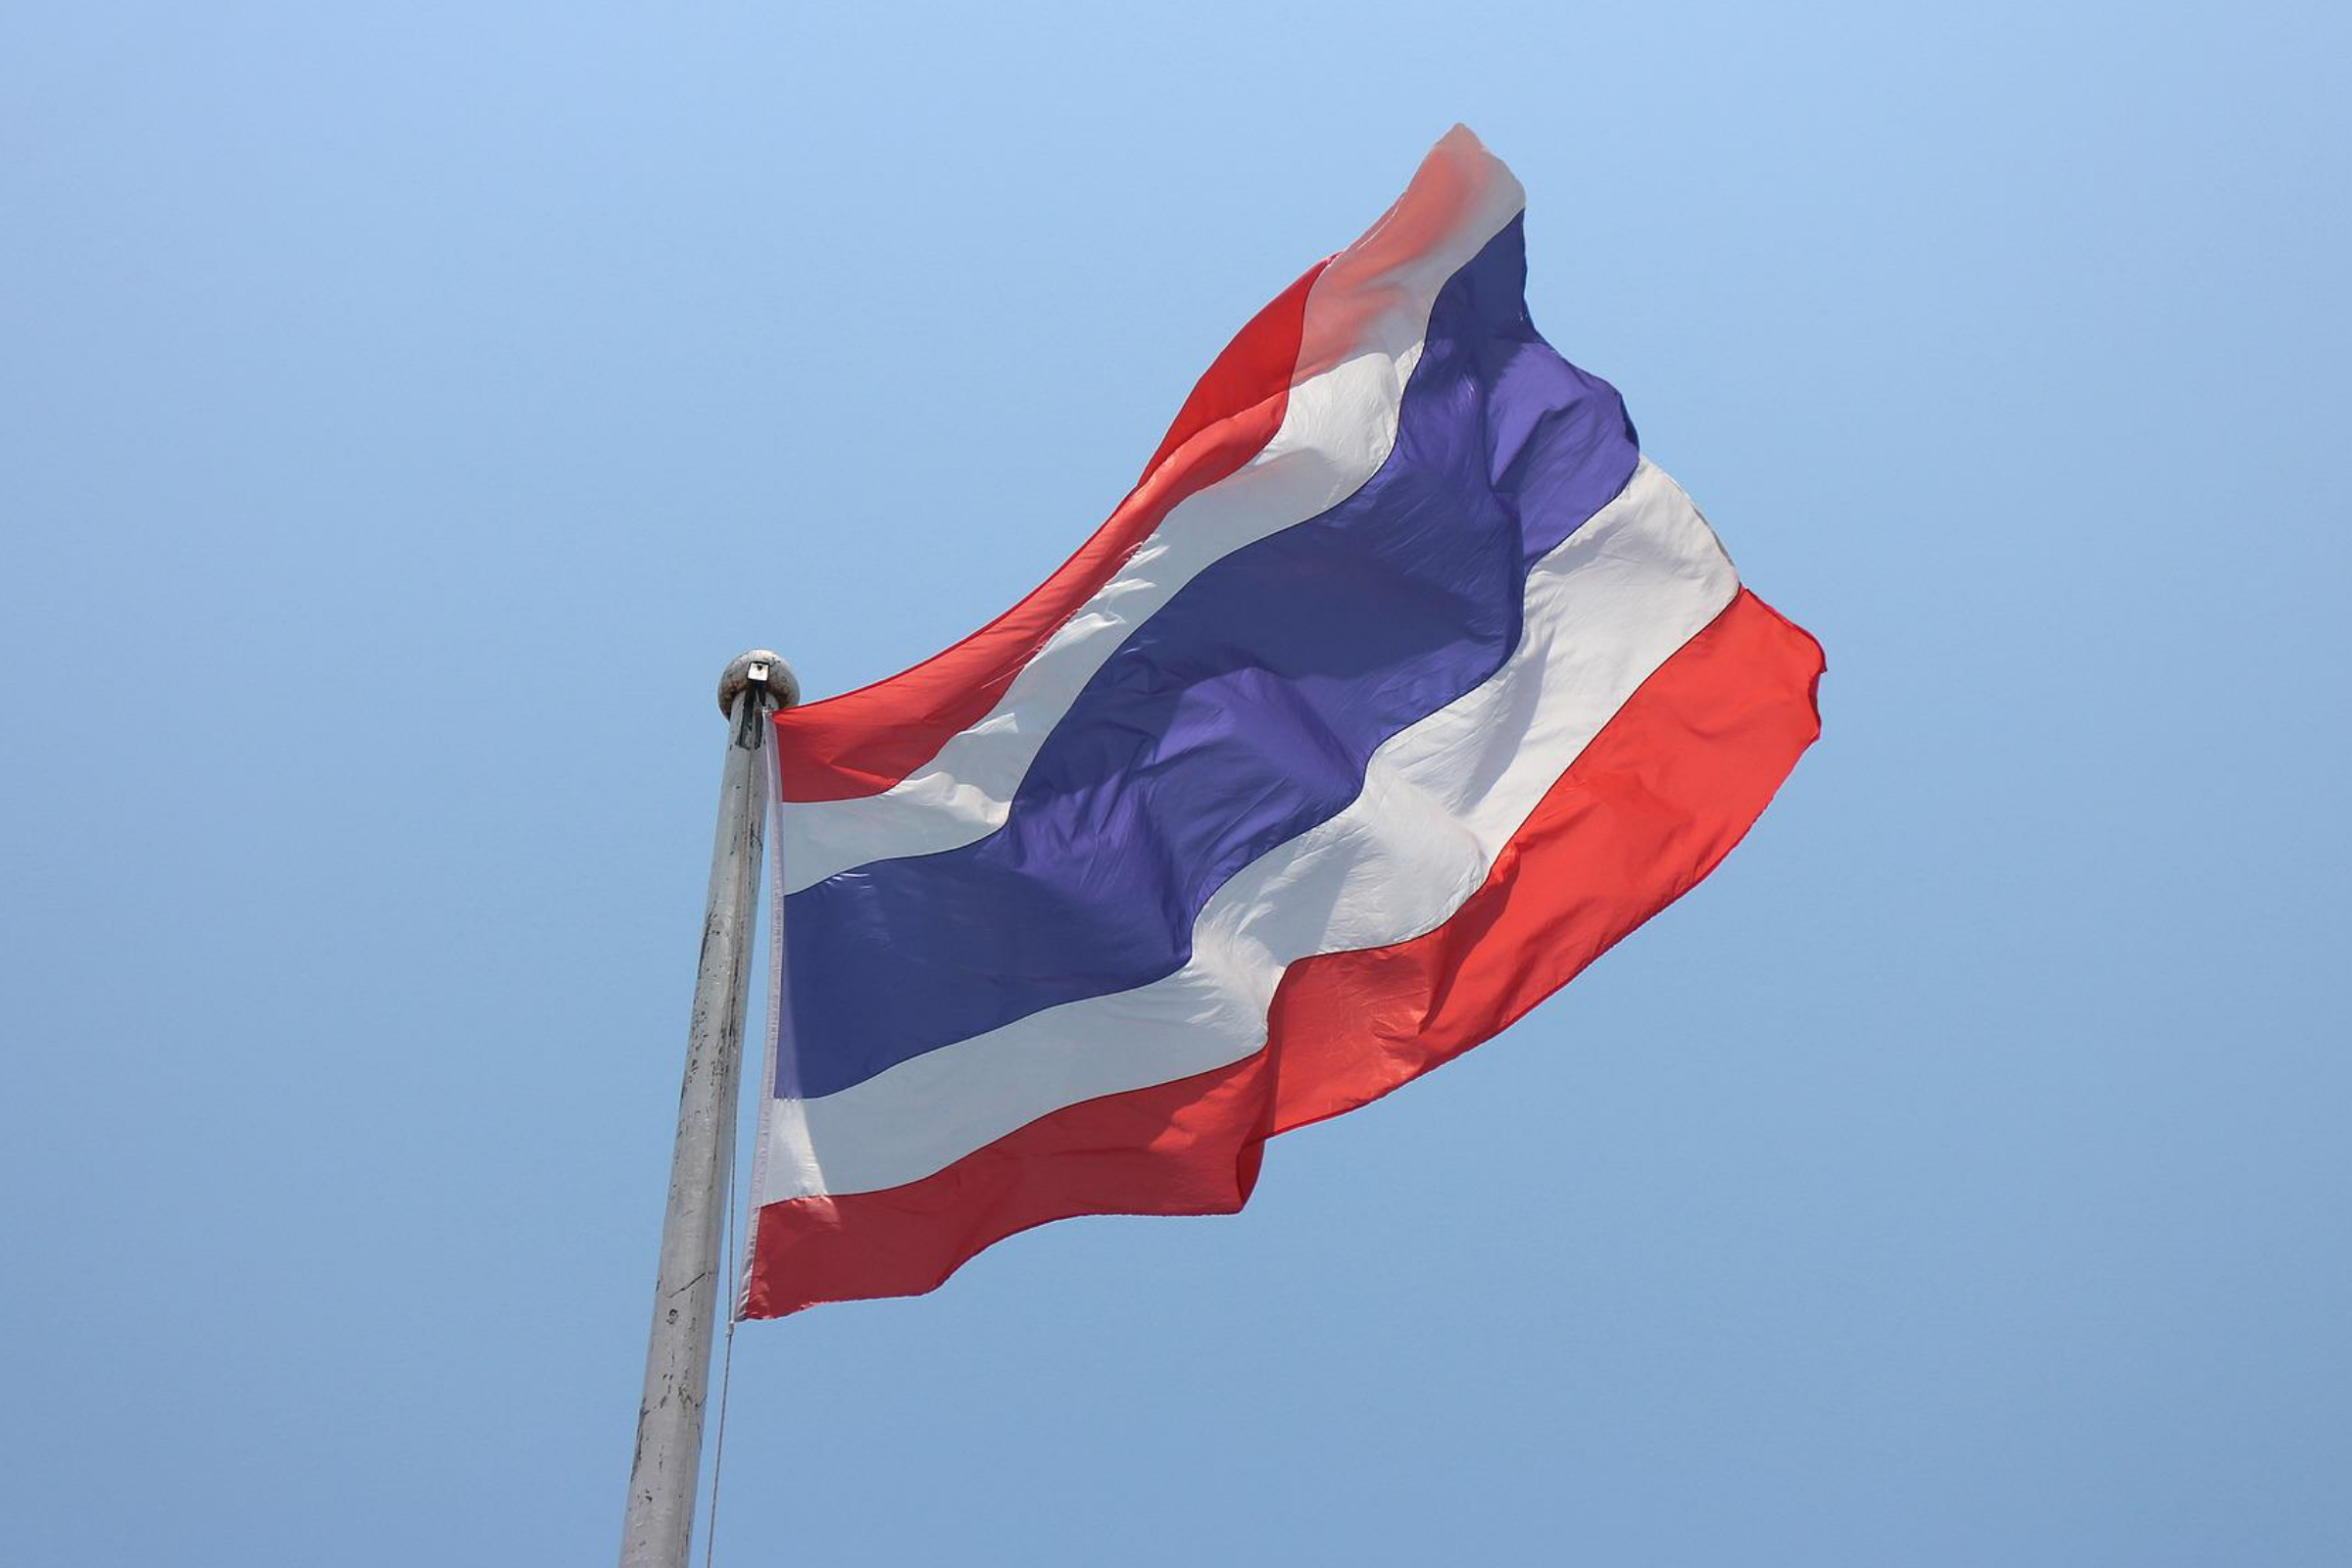 Thaise vlag